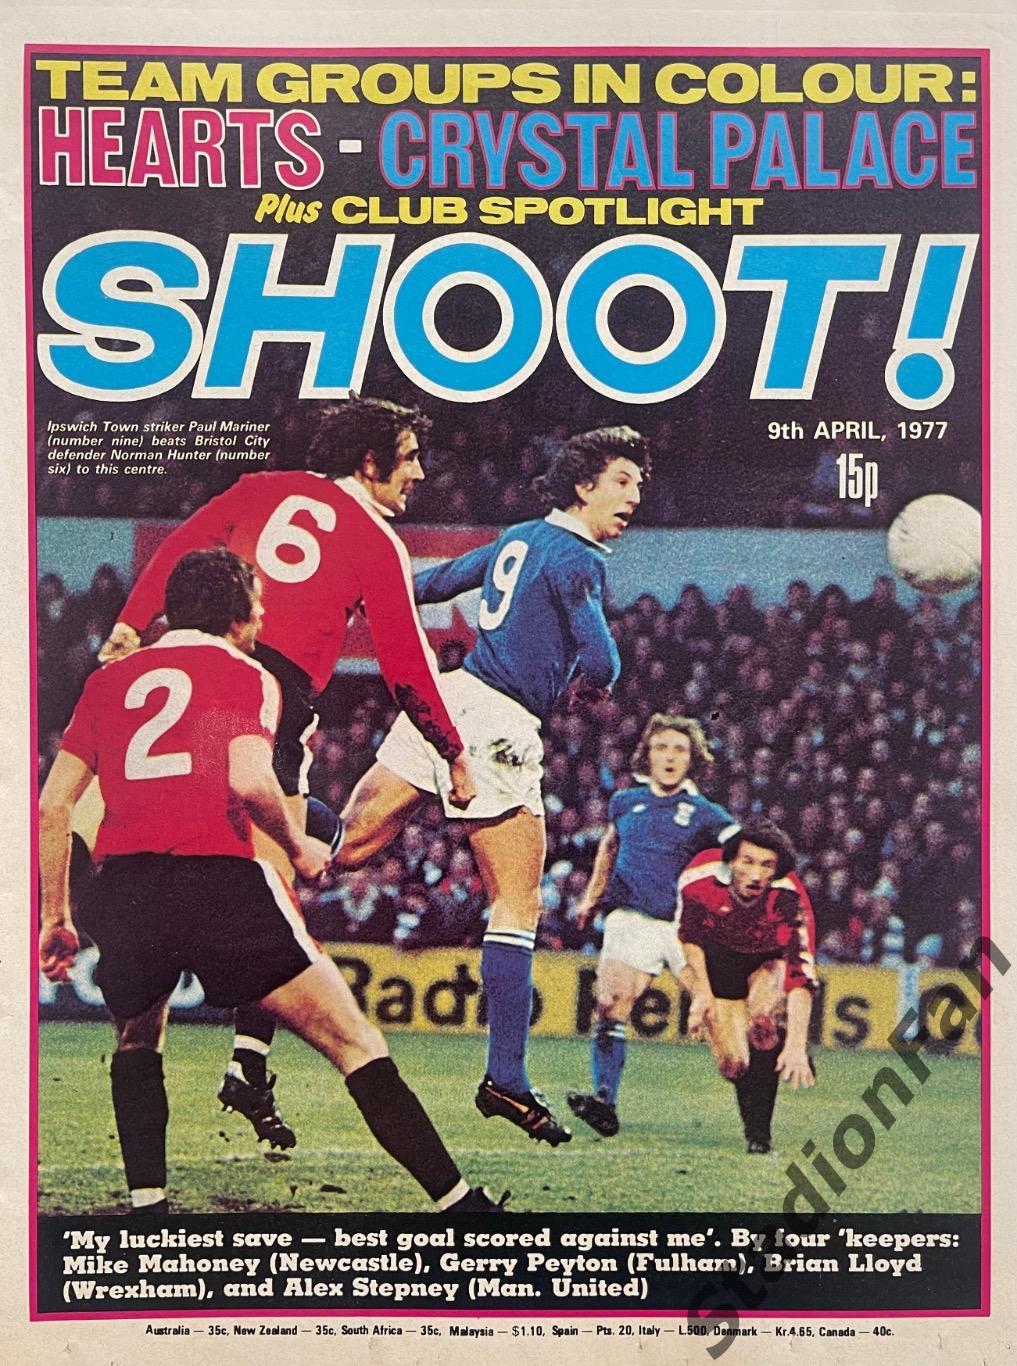 Журнал SHOOT! - 1977 год, от 9 апреля.